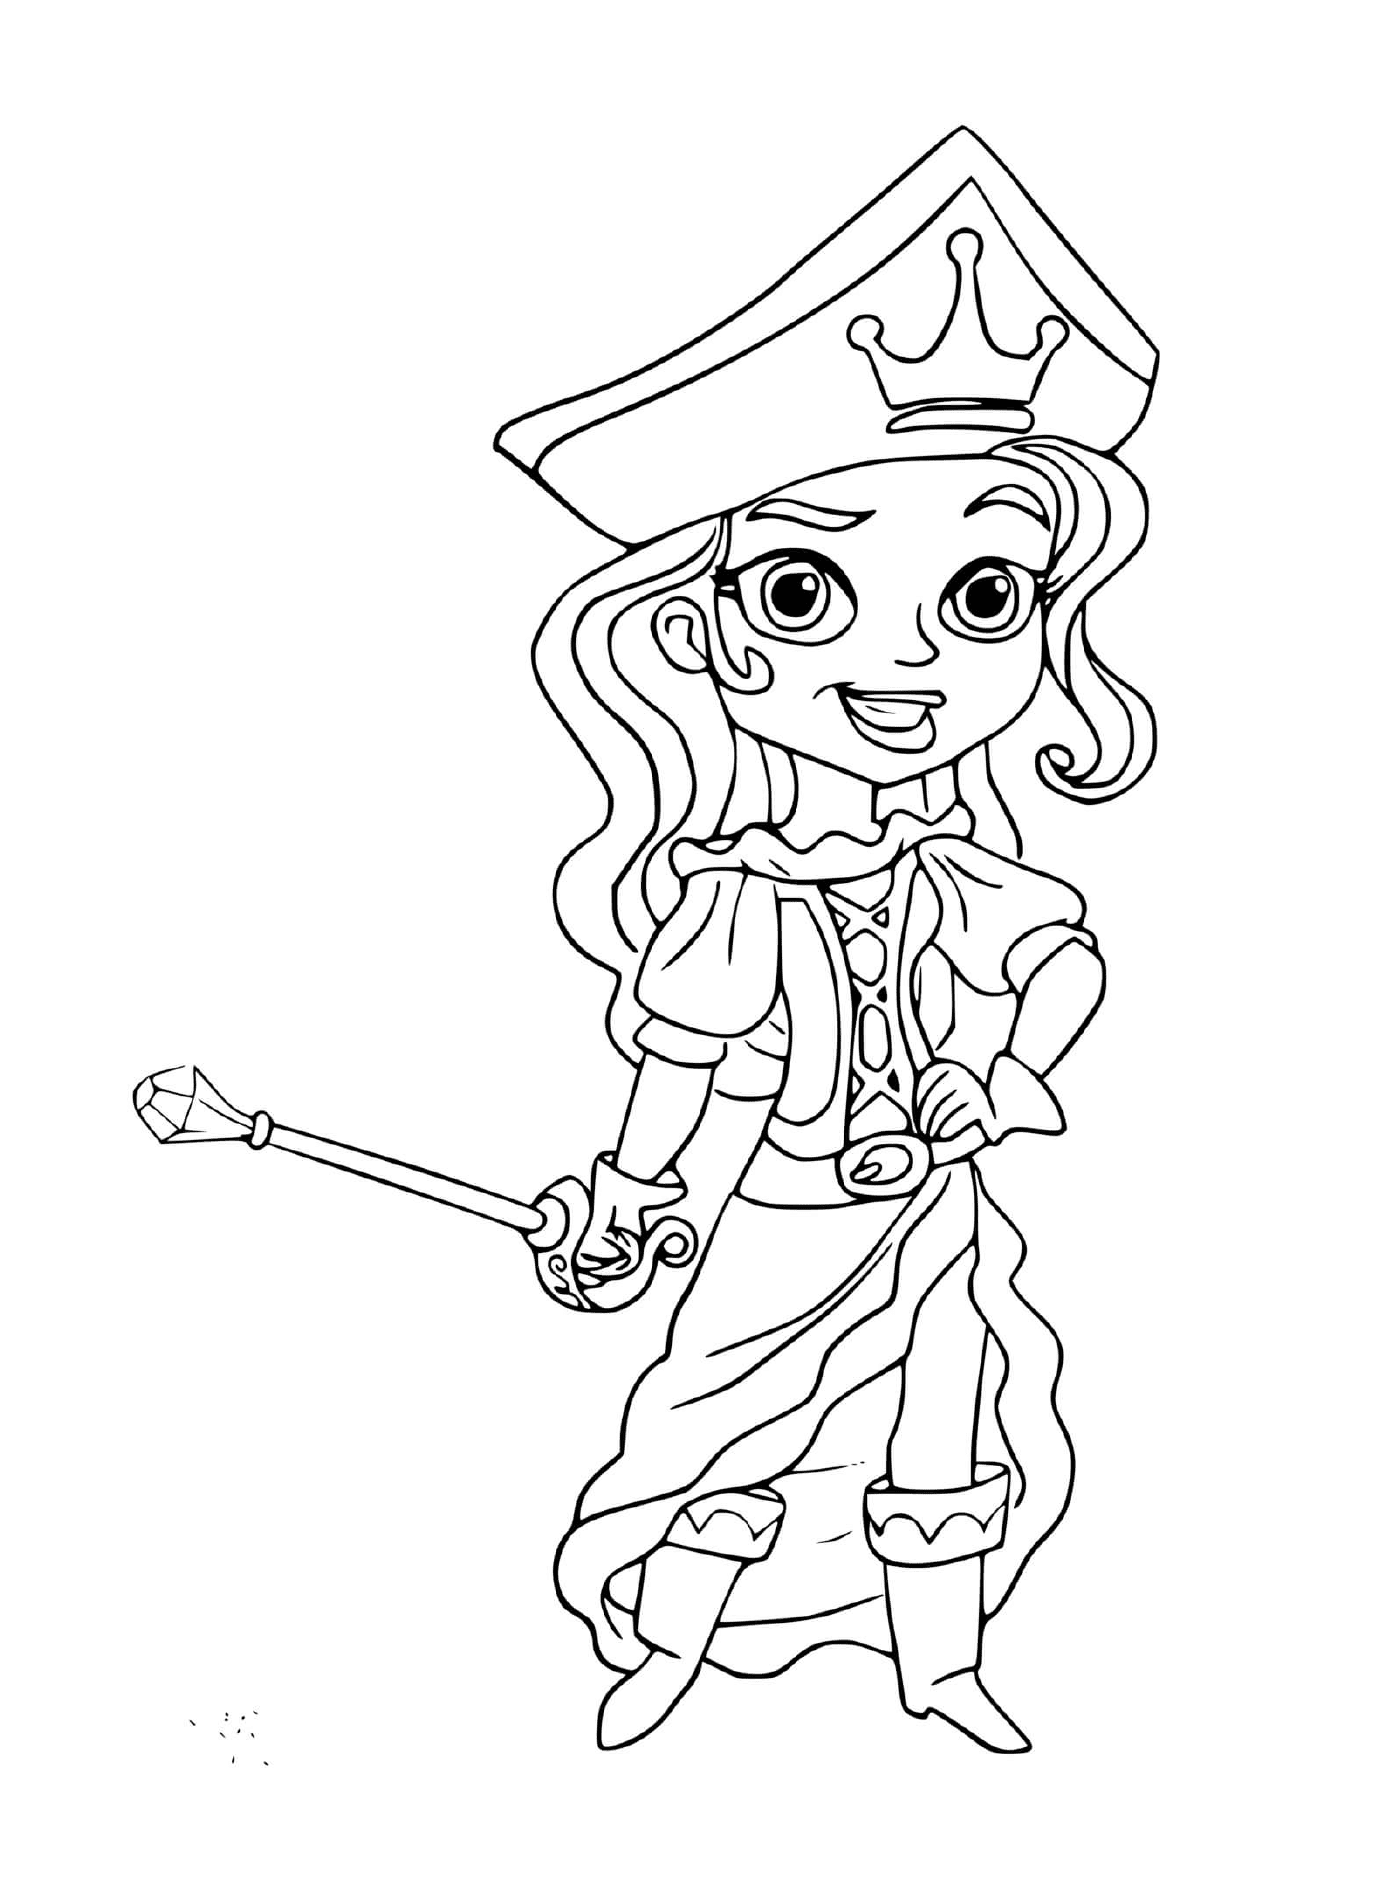  Menina pirata com espada corajosa 